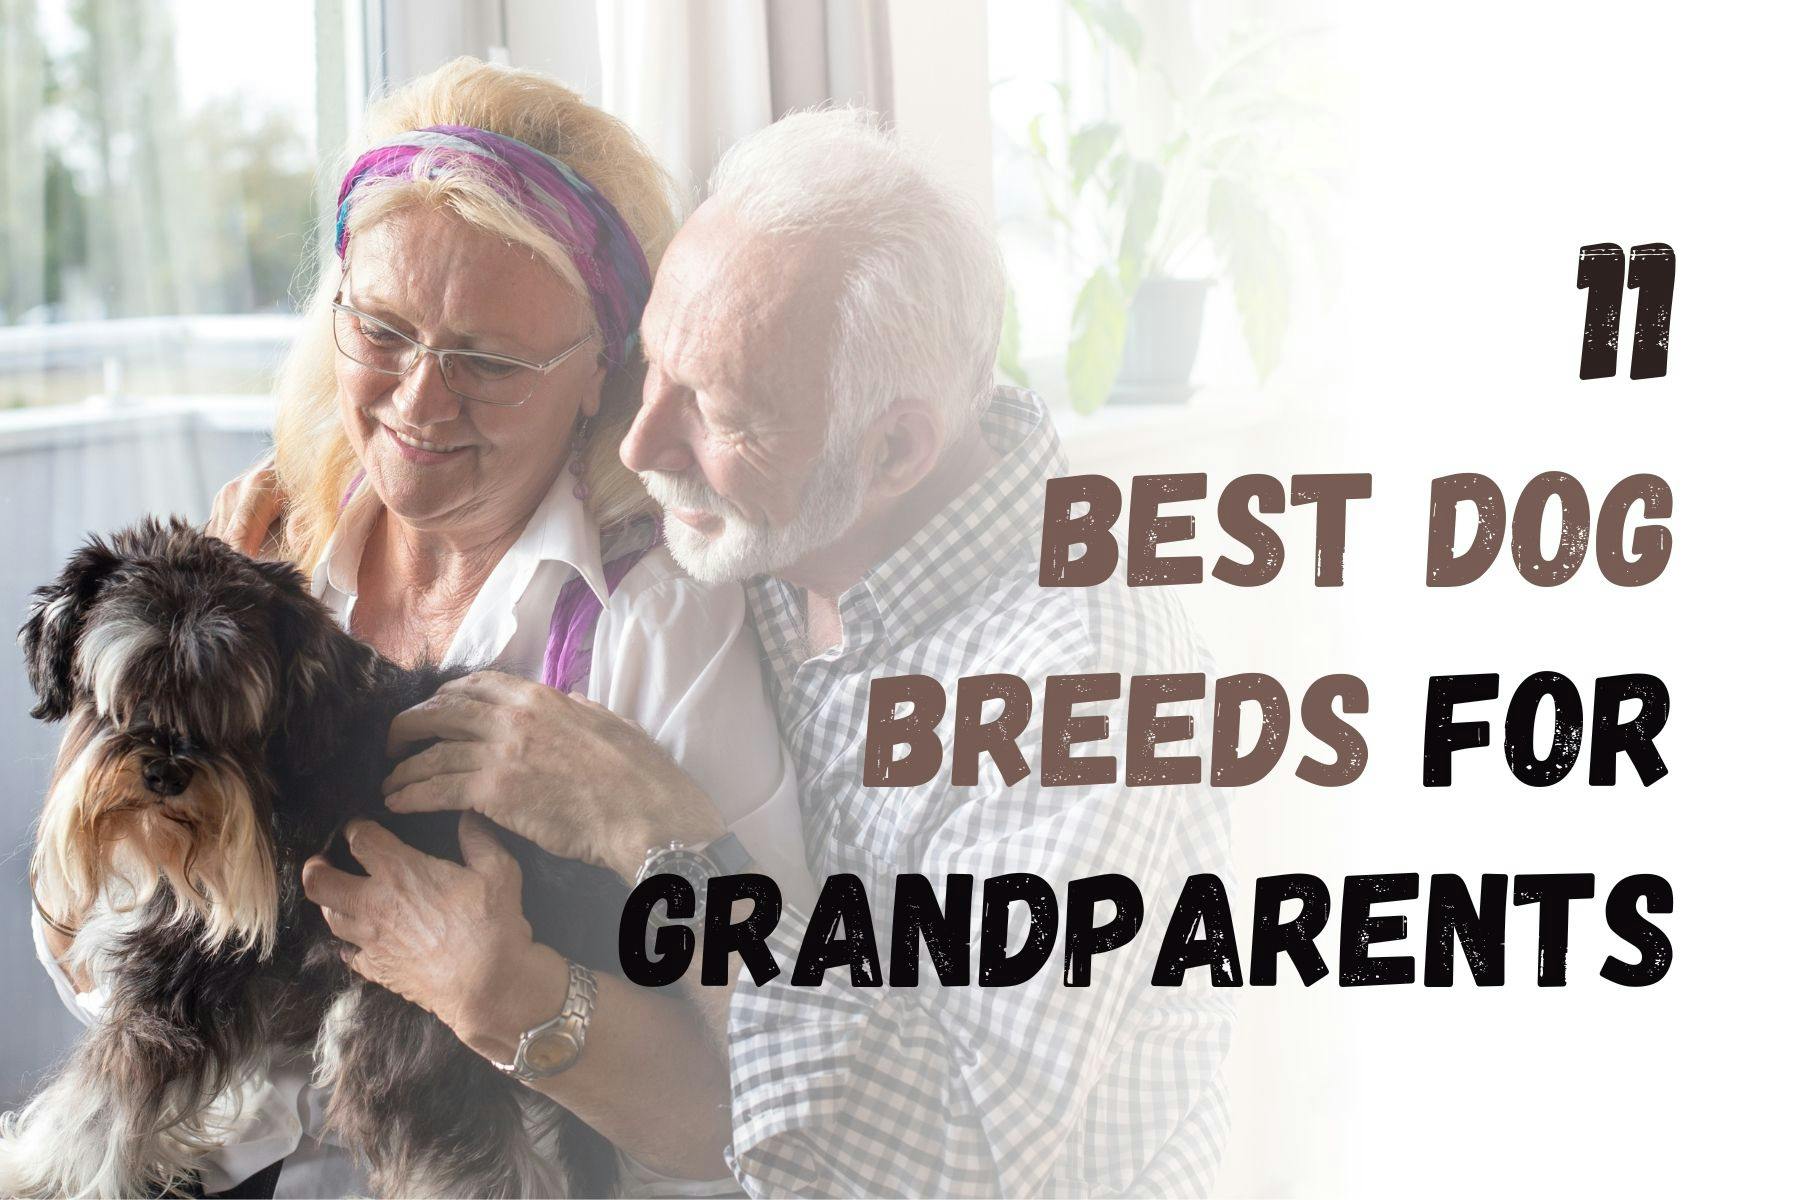 Top 11 Dog Breeds Ideal for Grandparents